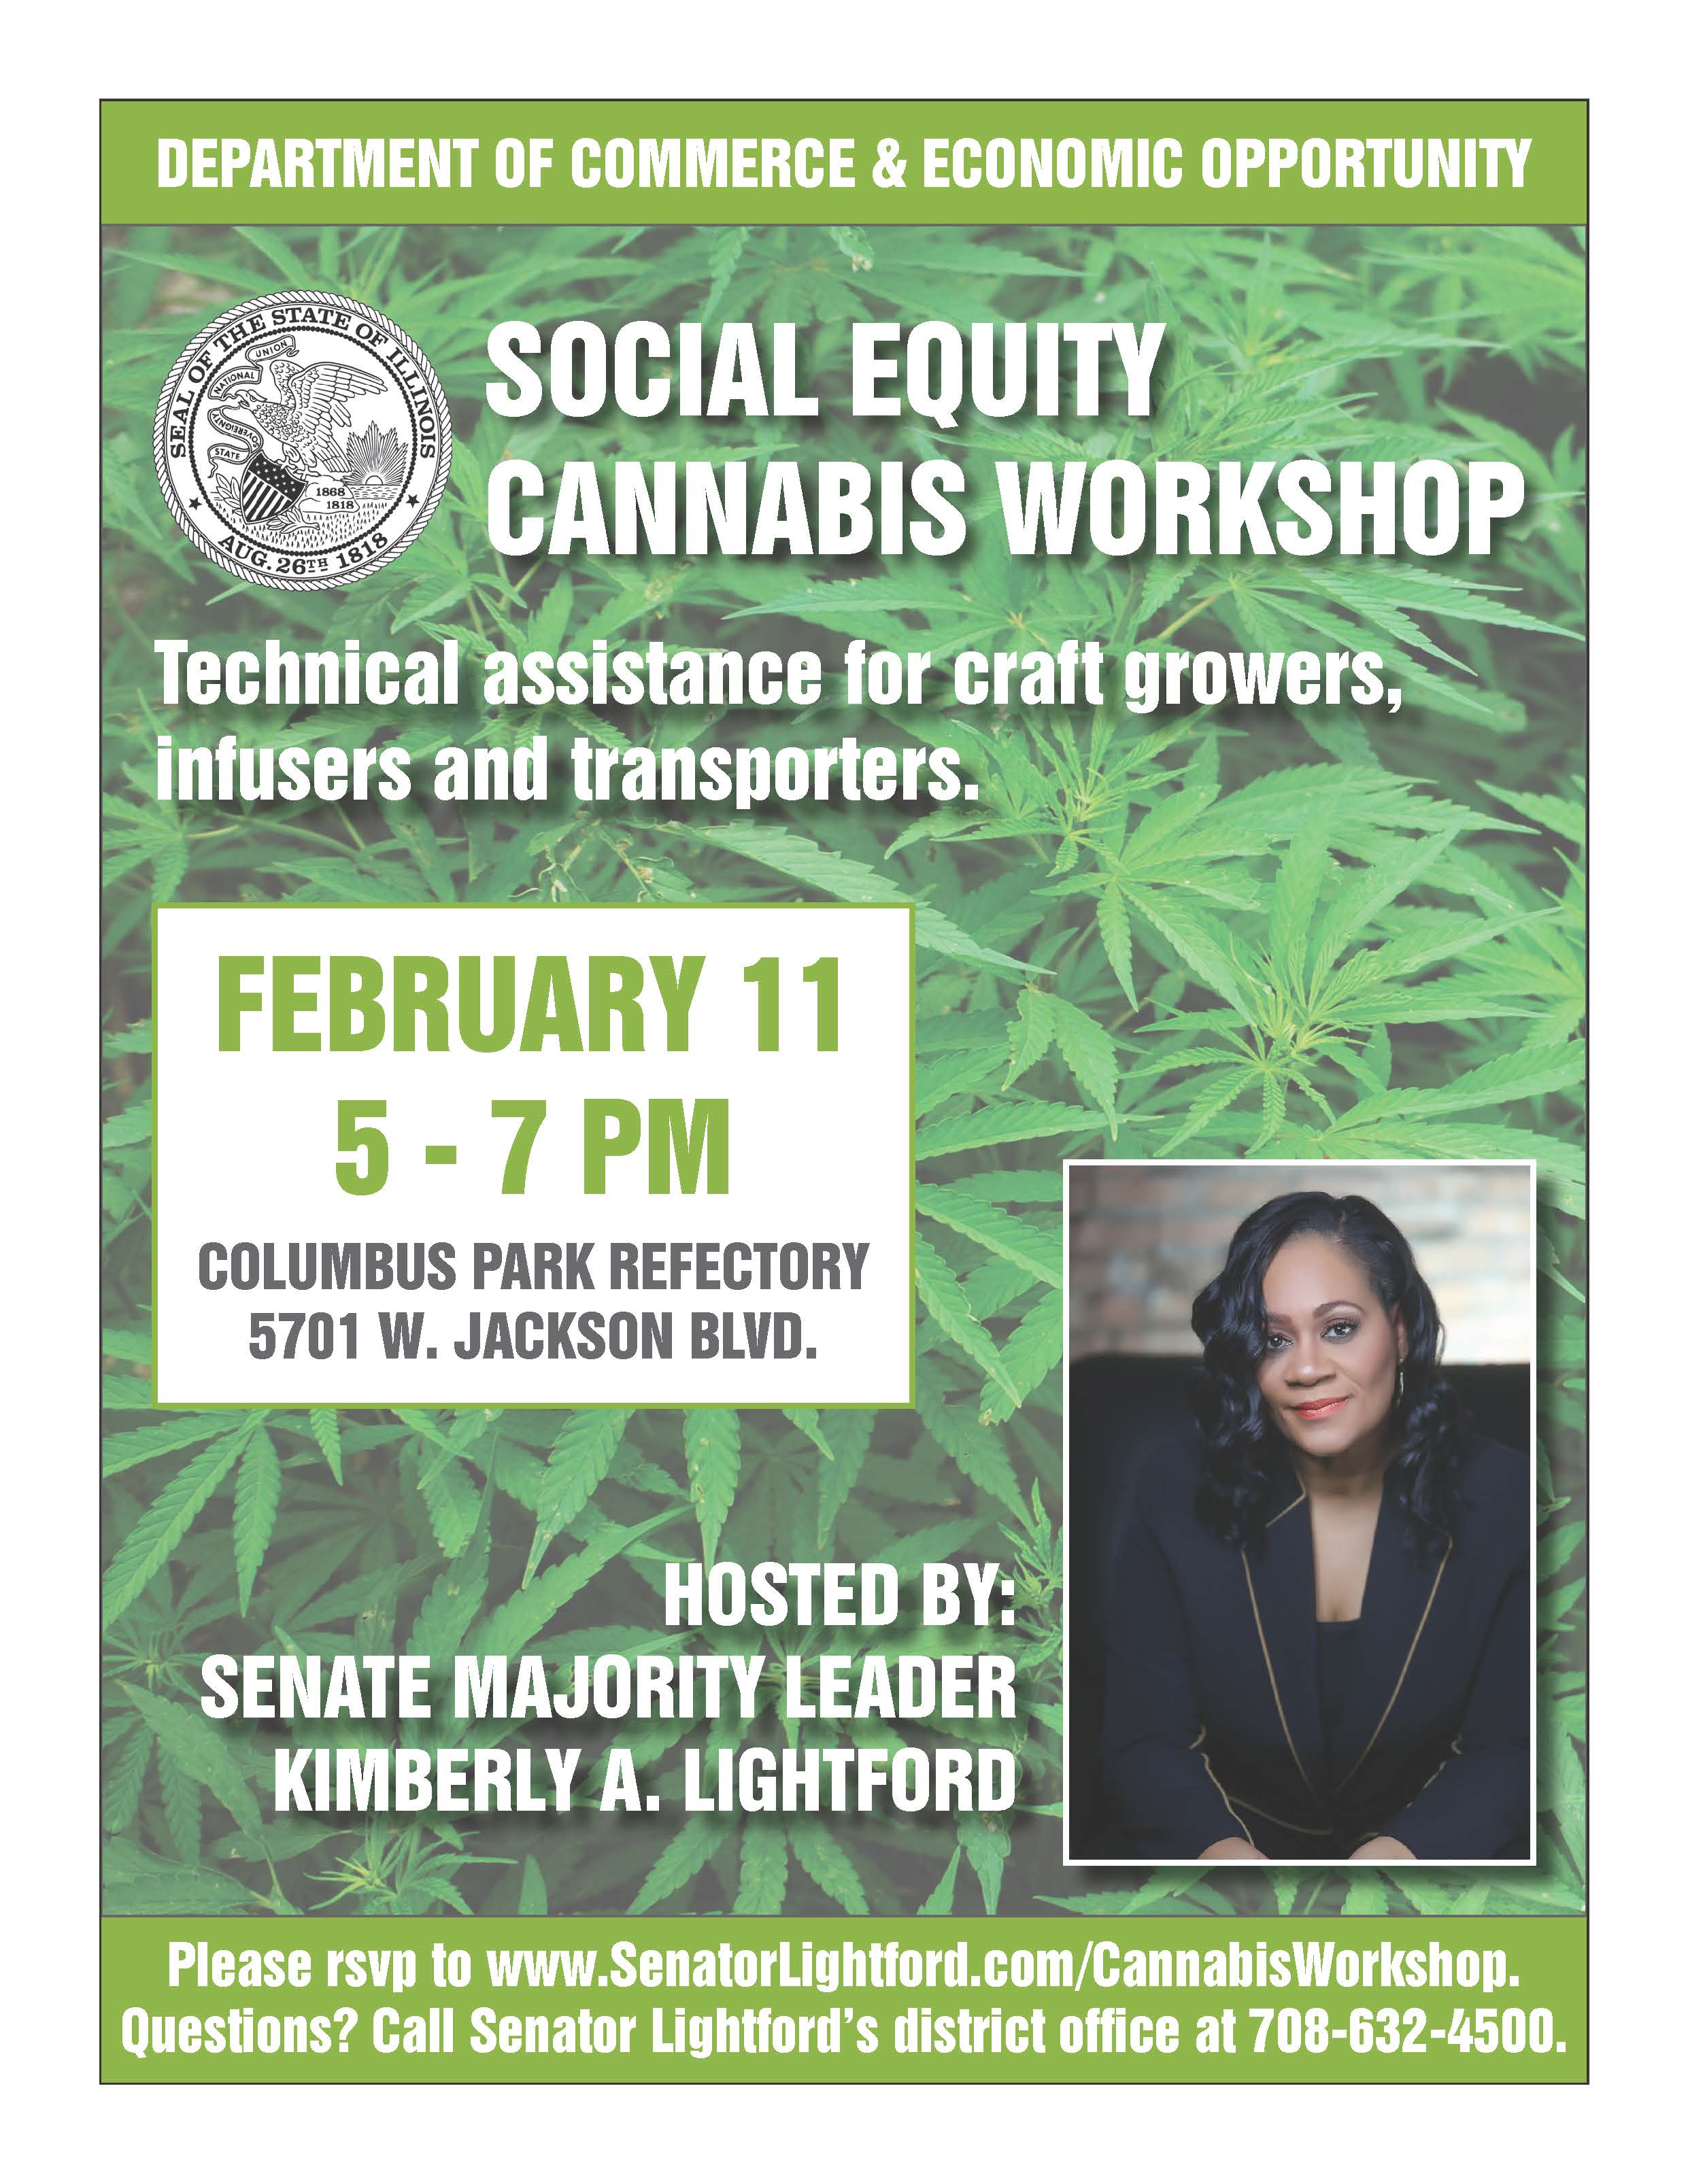 lightford cannabis workshop 002